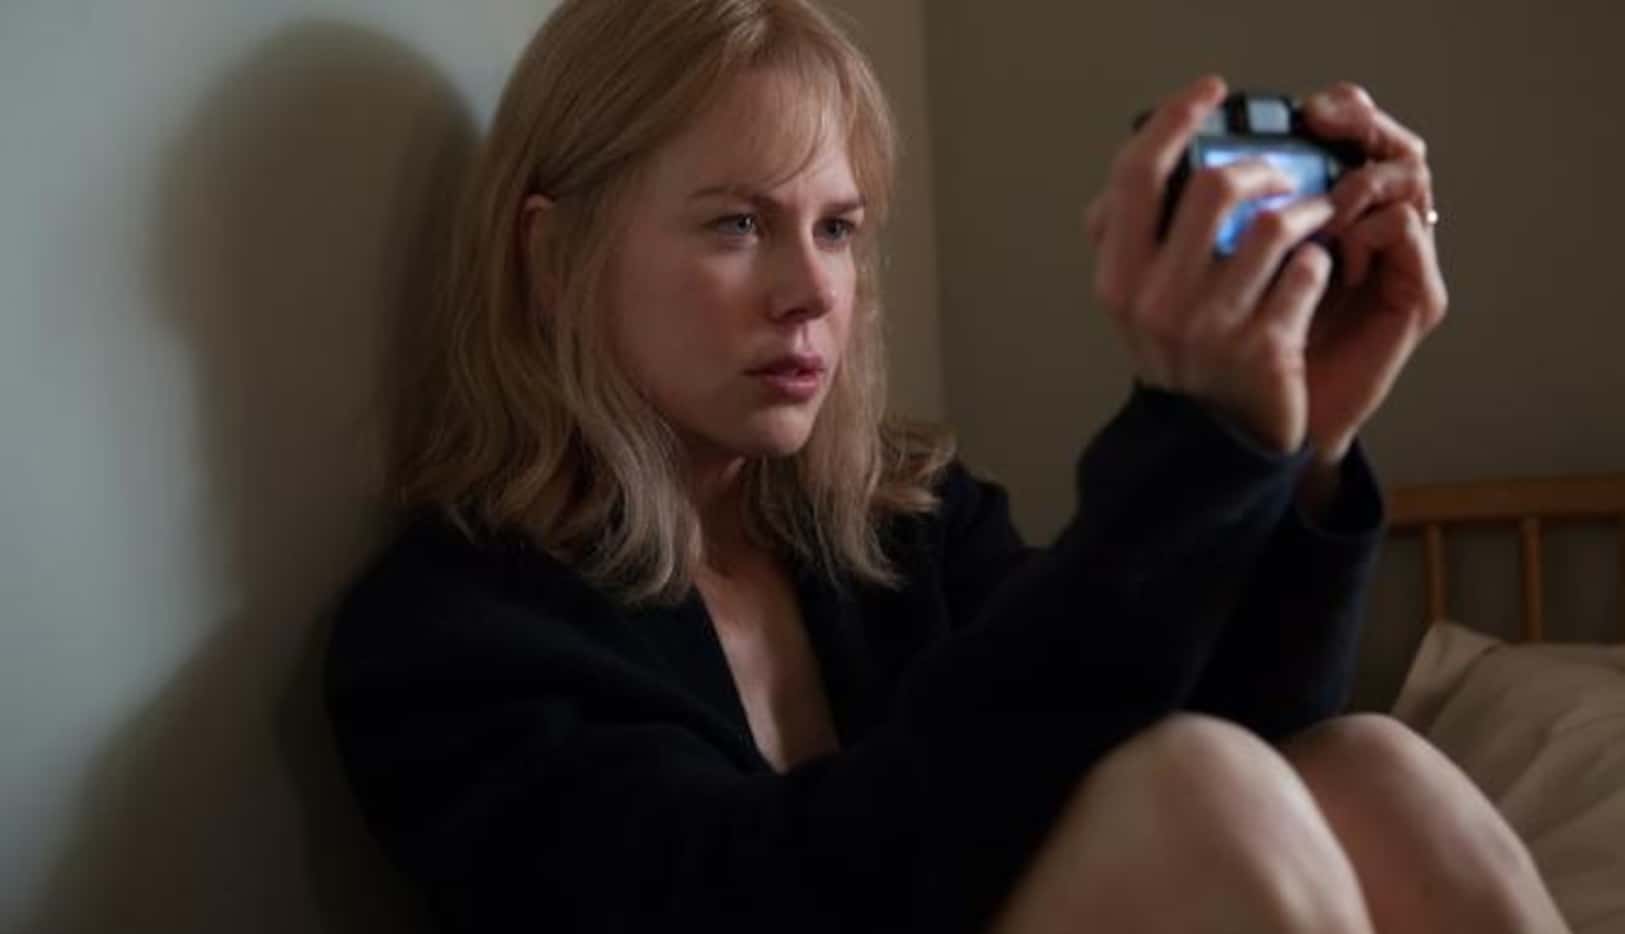 Nicole Kidman protagoniza “Before I Go To Sleep”, sobre una mujer que sufre de amnesia....